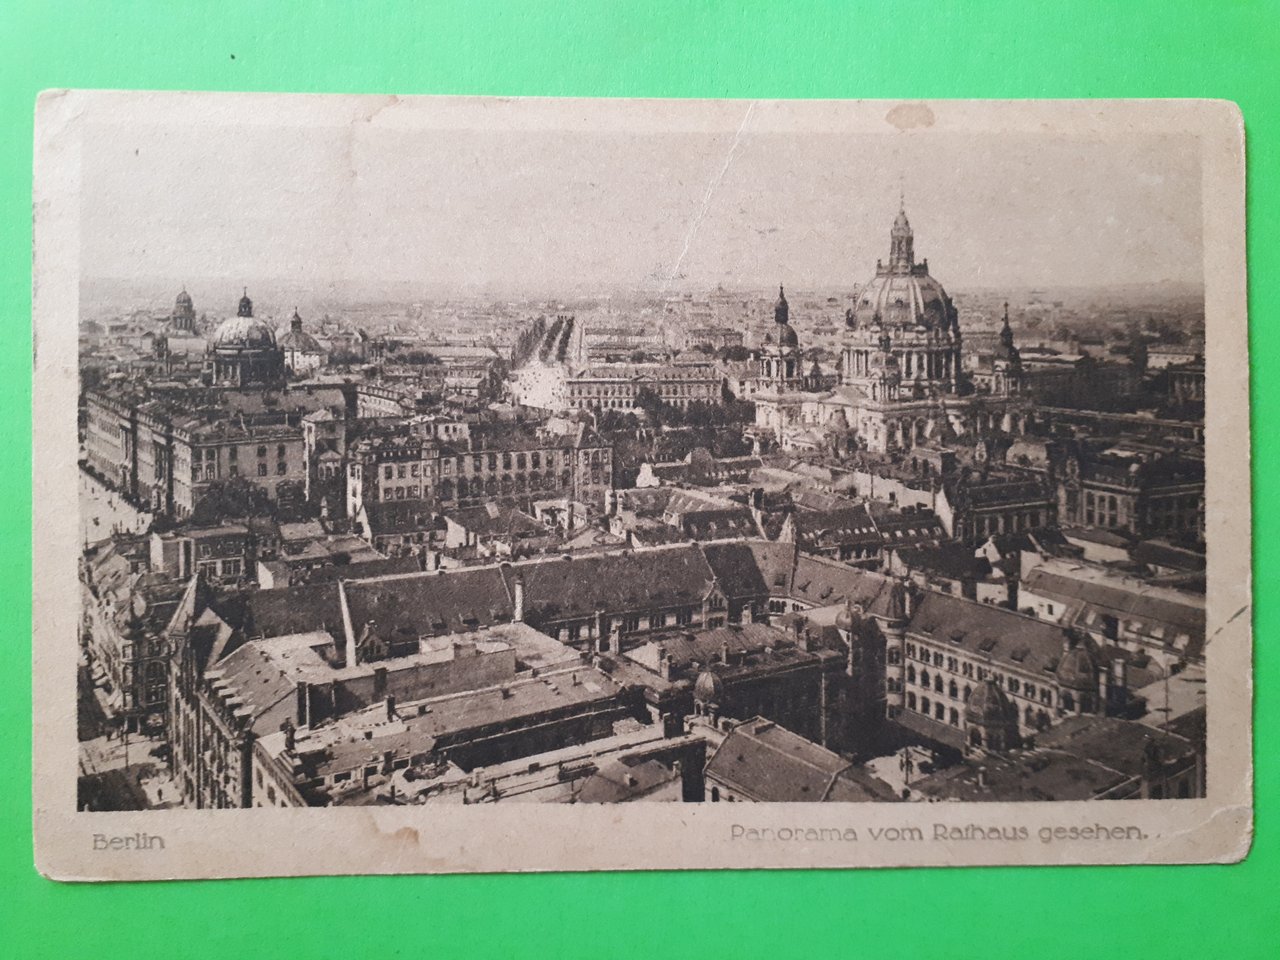 Cartolina - Berlin - Panorama vom Rafhaus gesehen - 1921